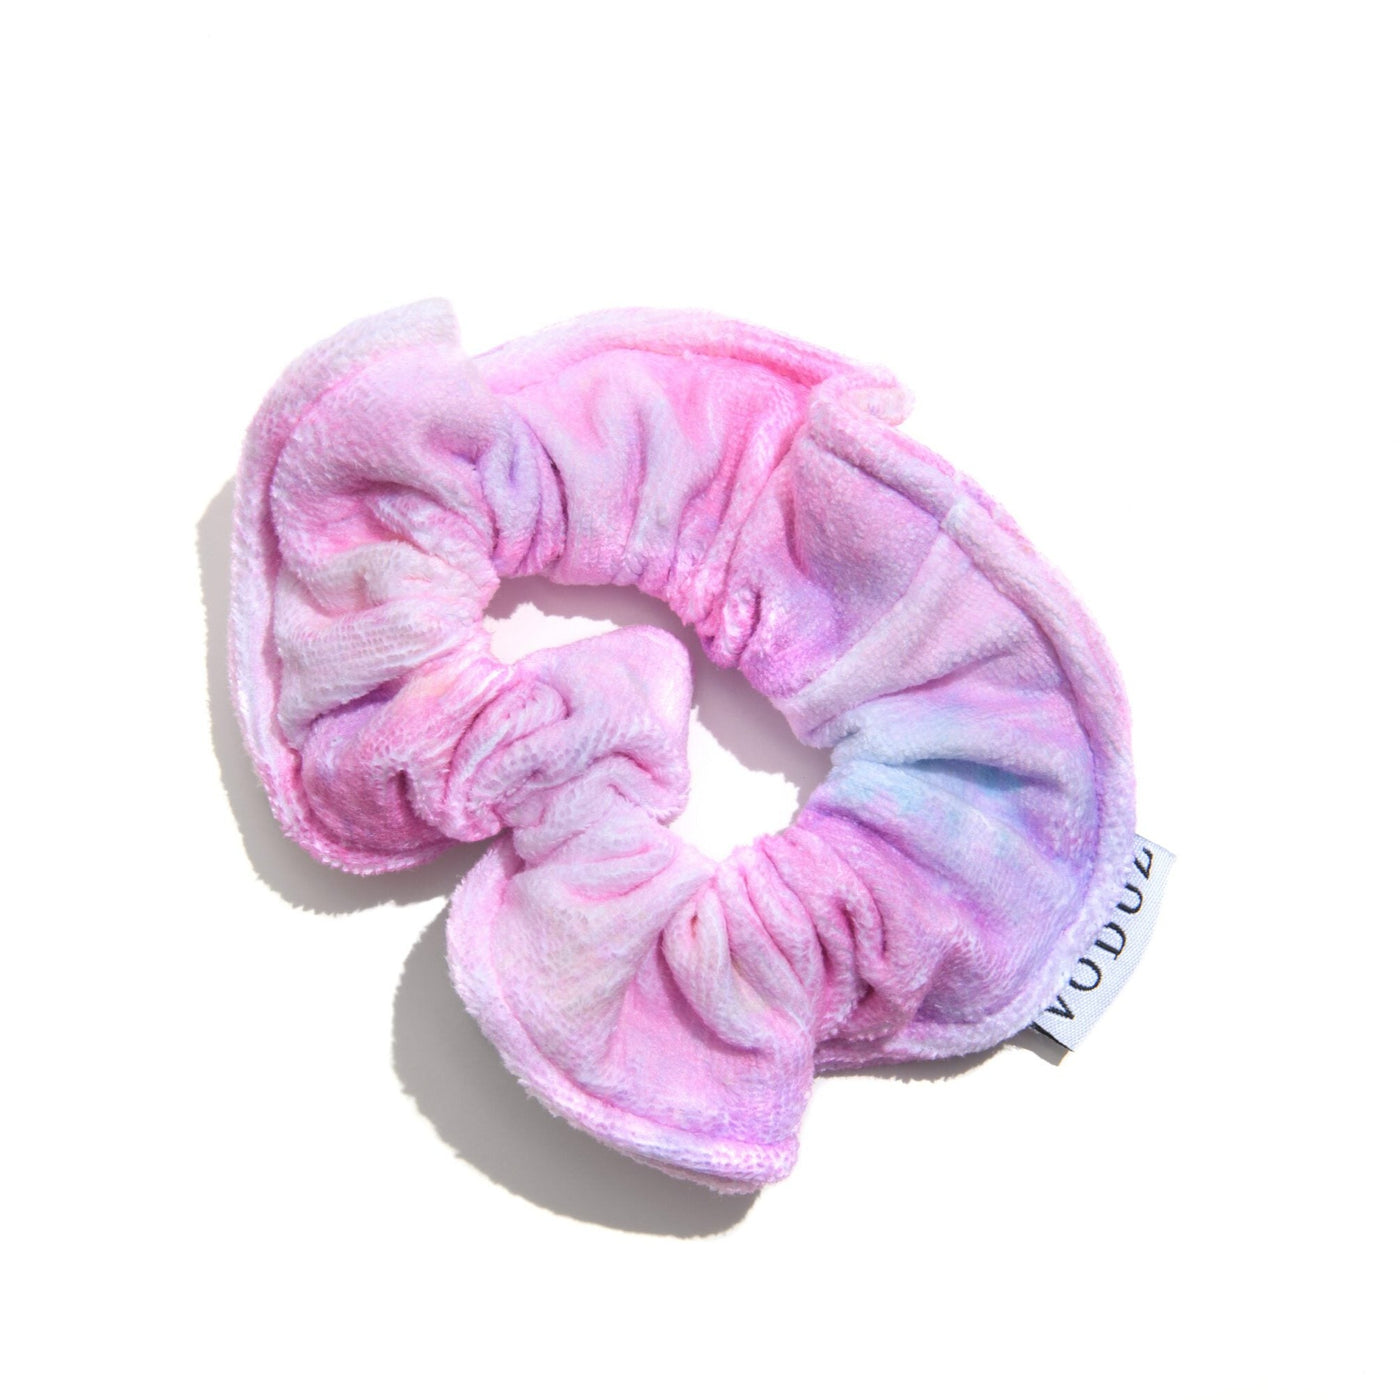 'Wrap Up' - Microfibre Towel Hair Scrunchie (Tie Dye)